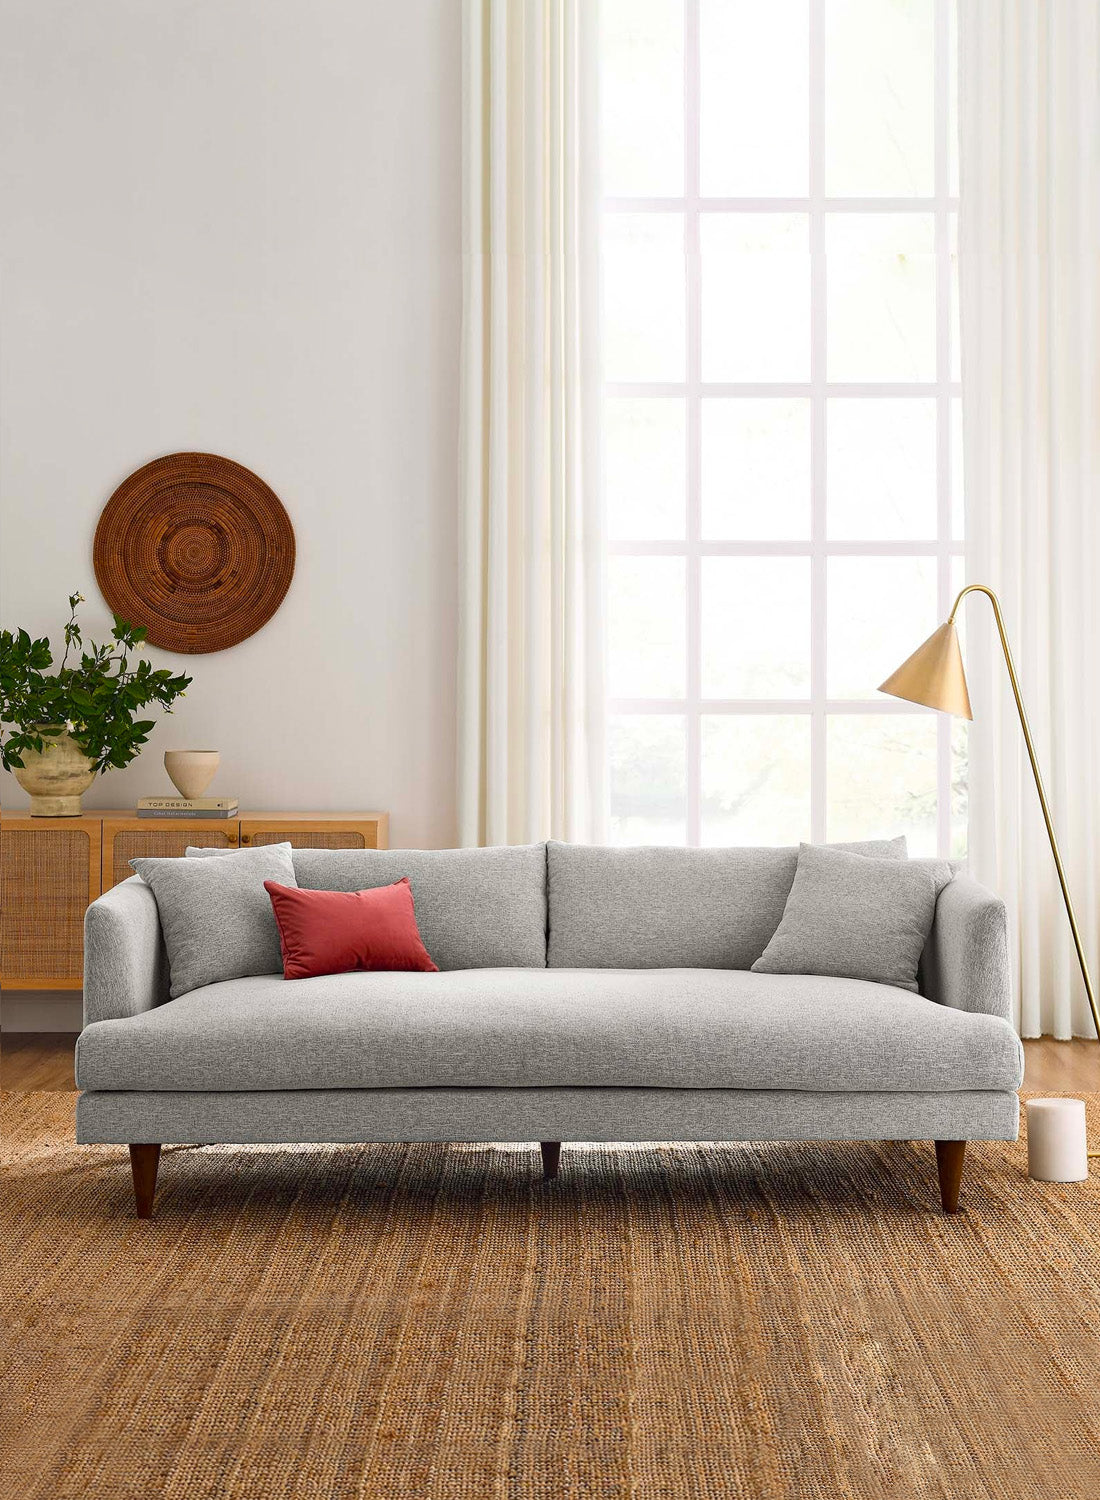 Luxton Sofa, light gray